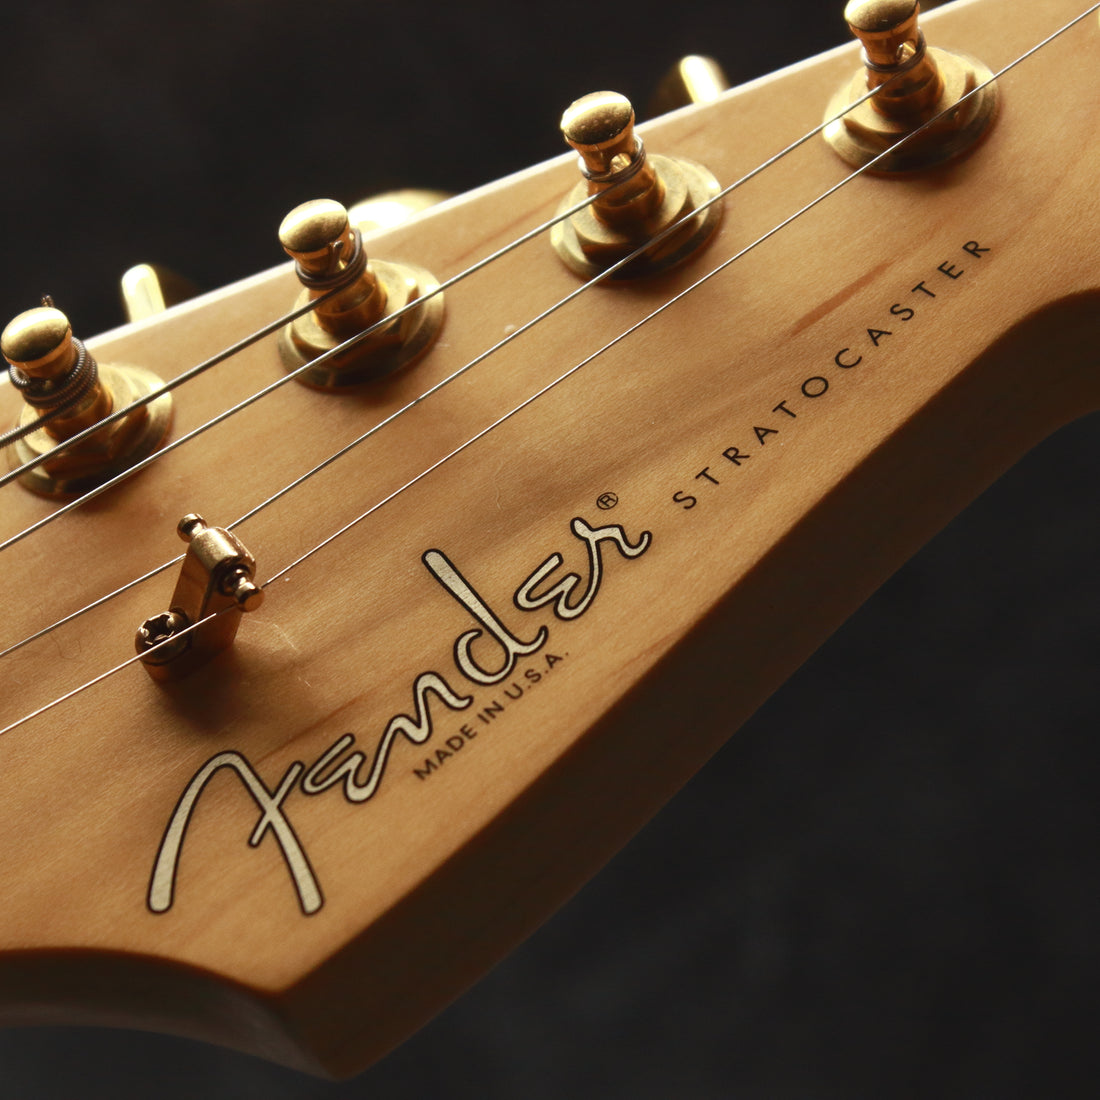 Fender American Standard Stratocaster FSR Walnut Stain 2012